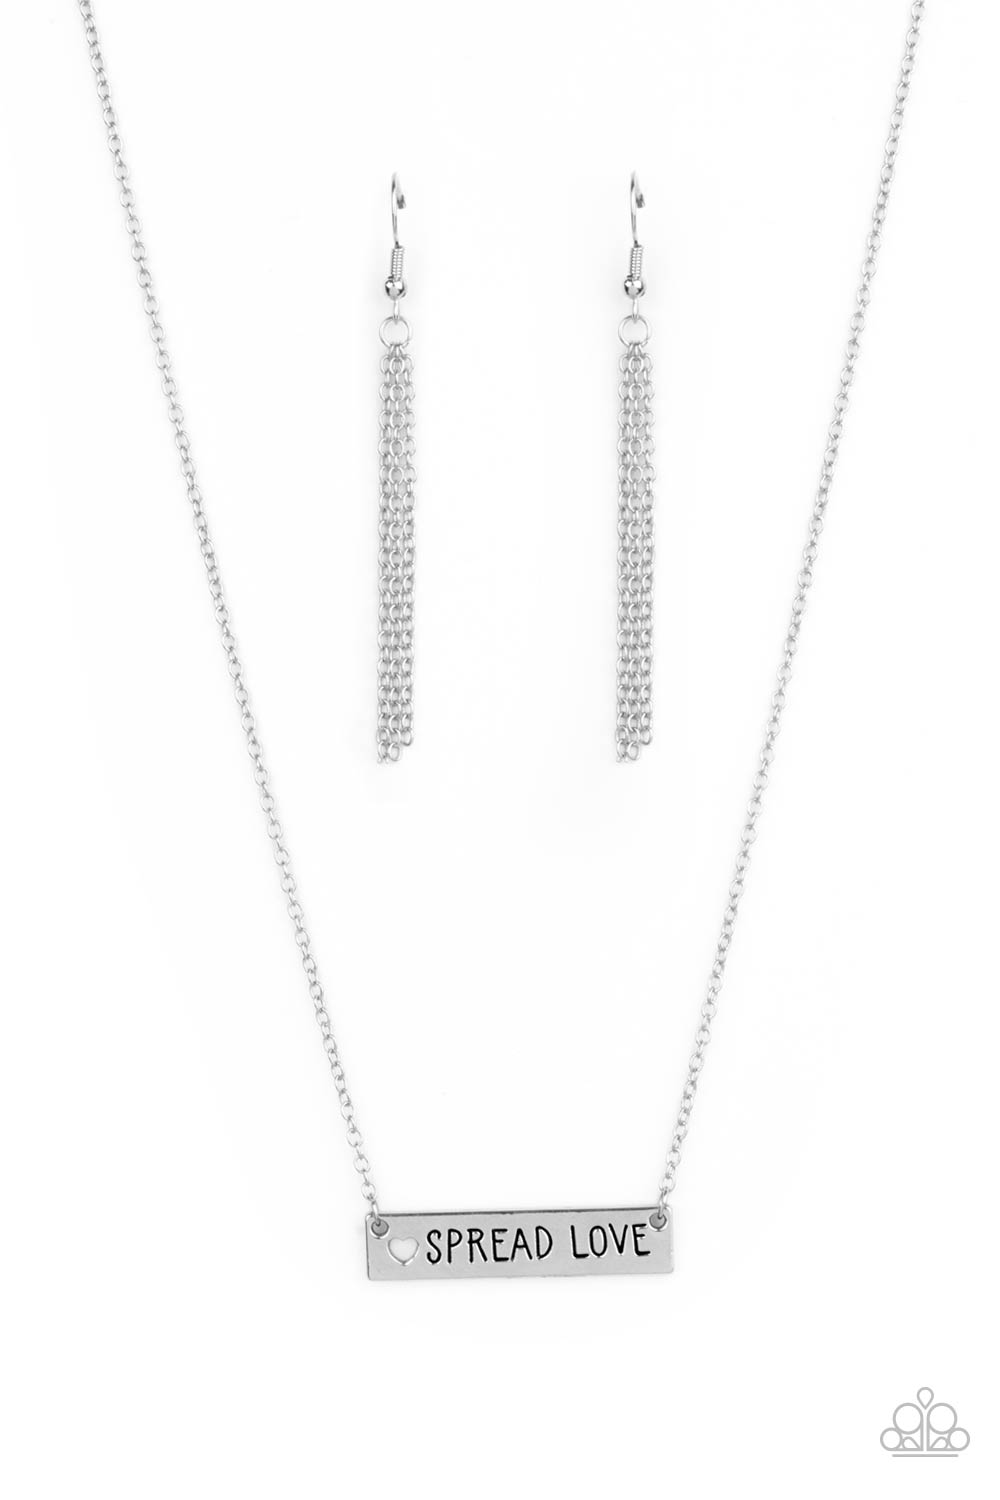 Paparazzi Accessories - Spread Love #N701 - Silver Necklace